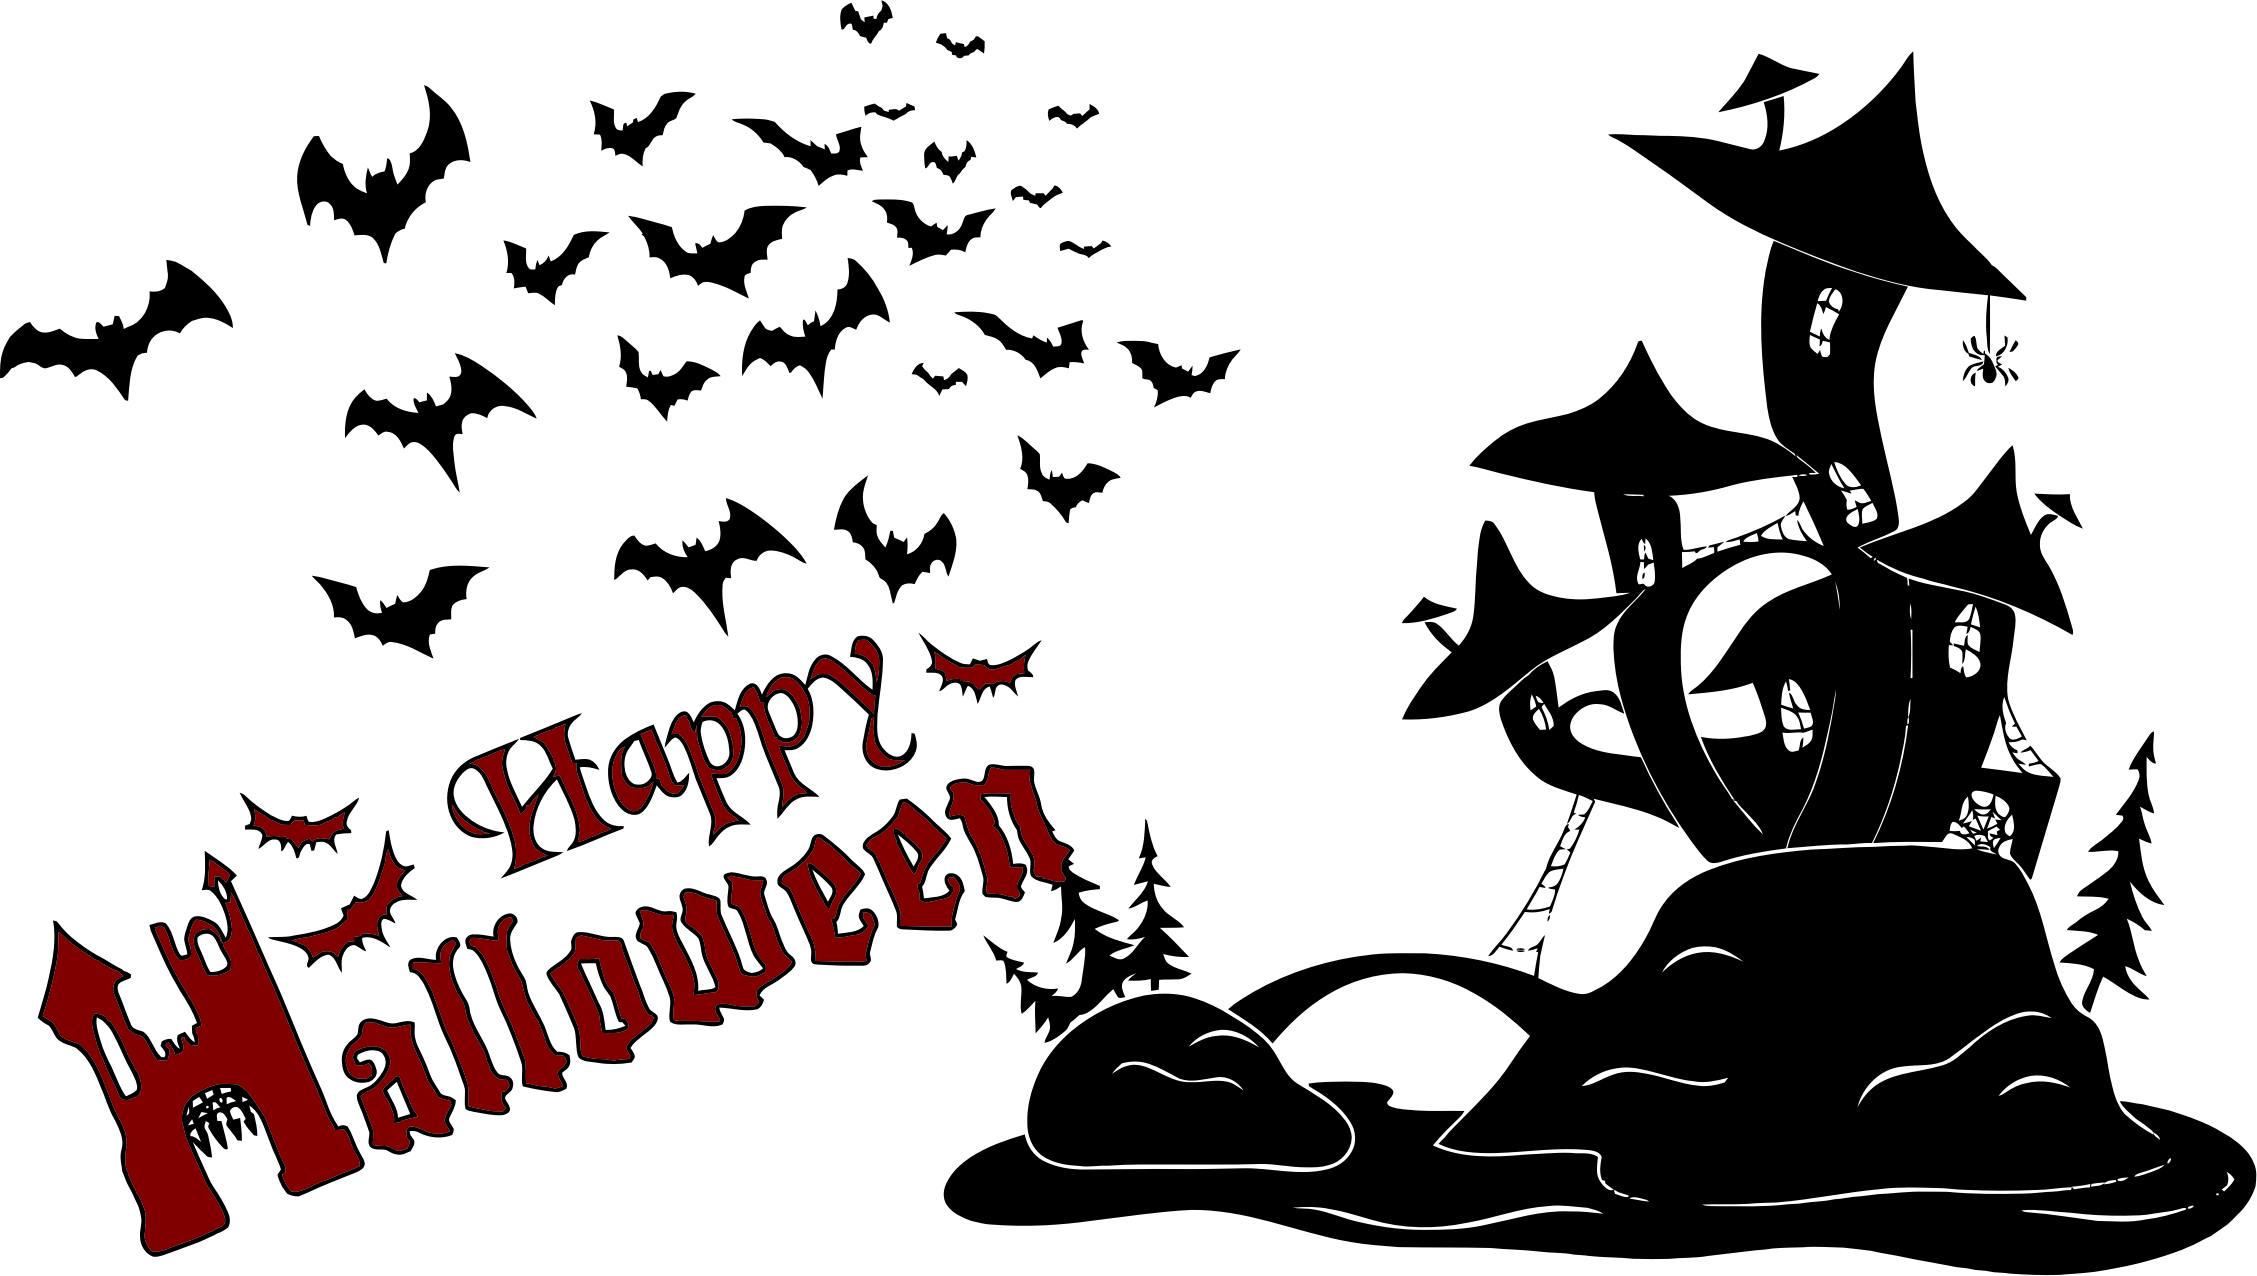 Happy halloween silhouette by. Graveyard clipart graveyard scene